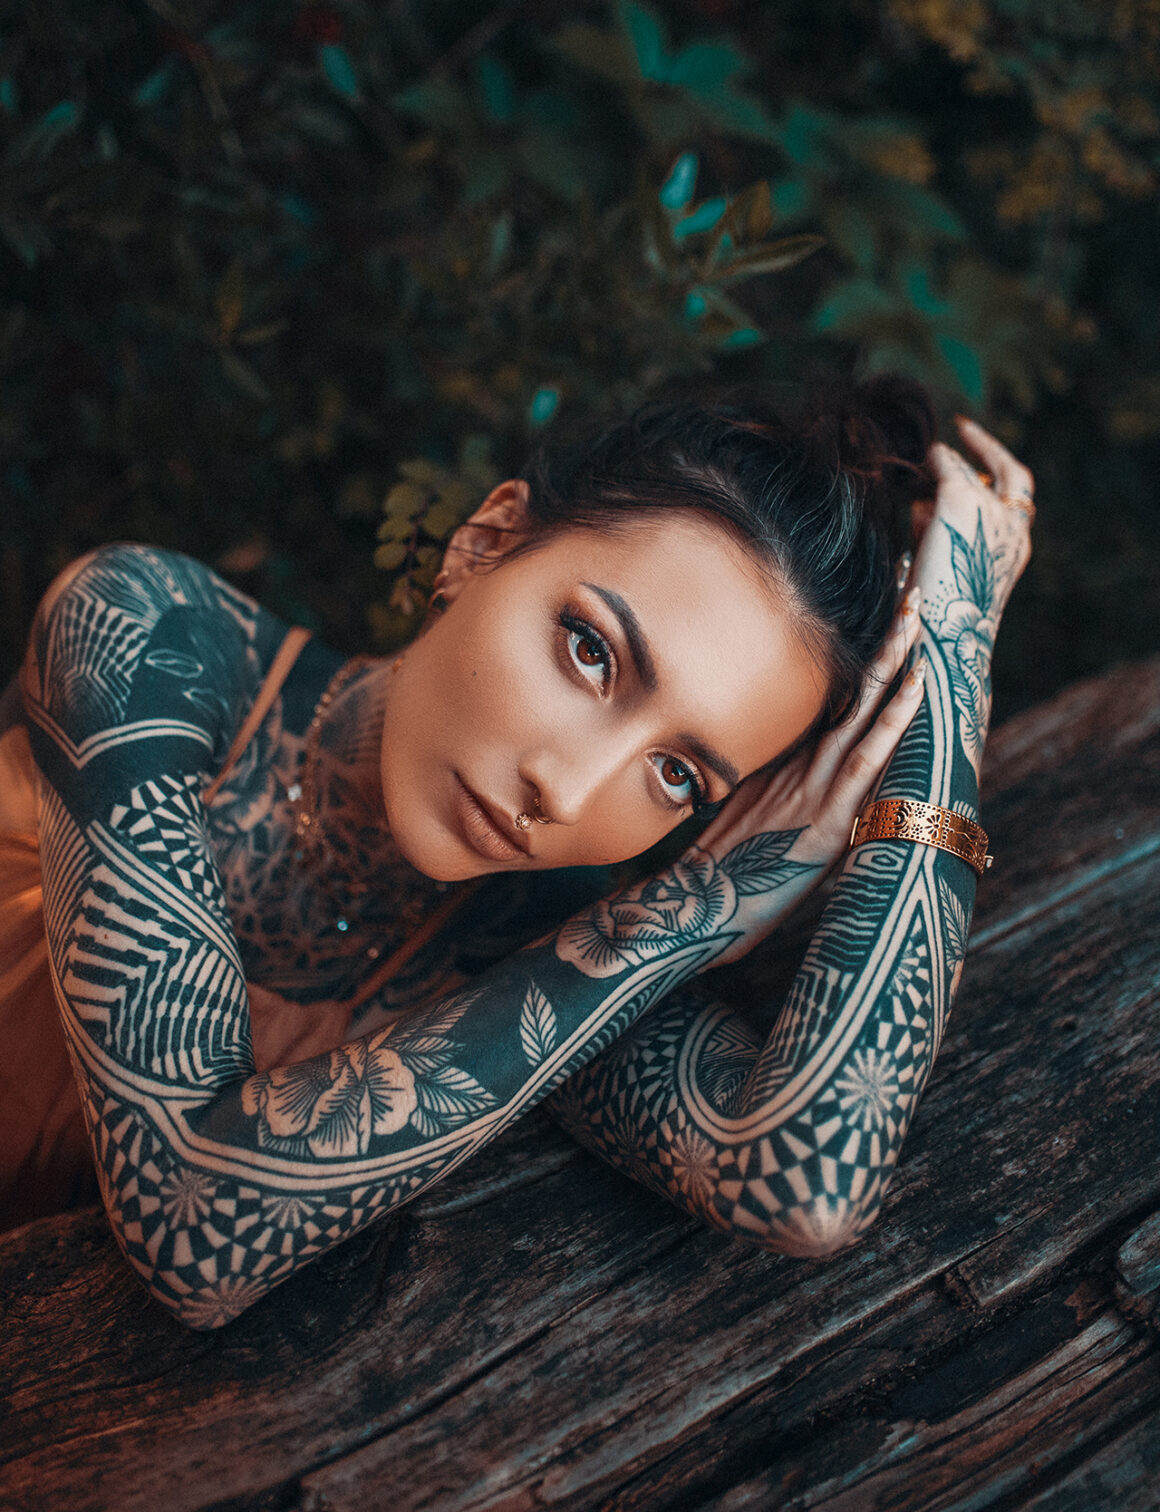 Blum is the chosen model for the Tattoo Life calendar 2022